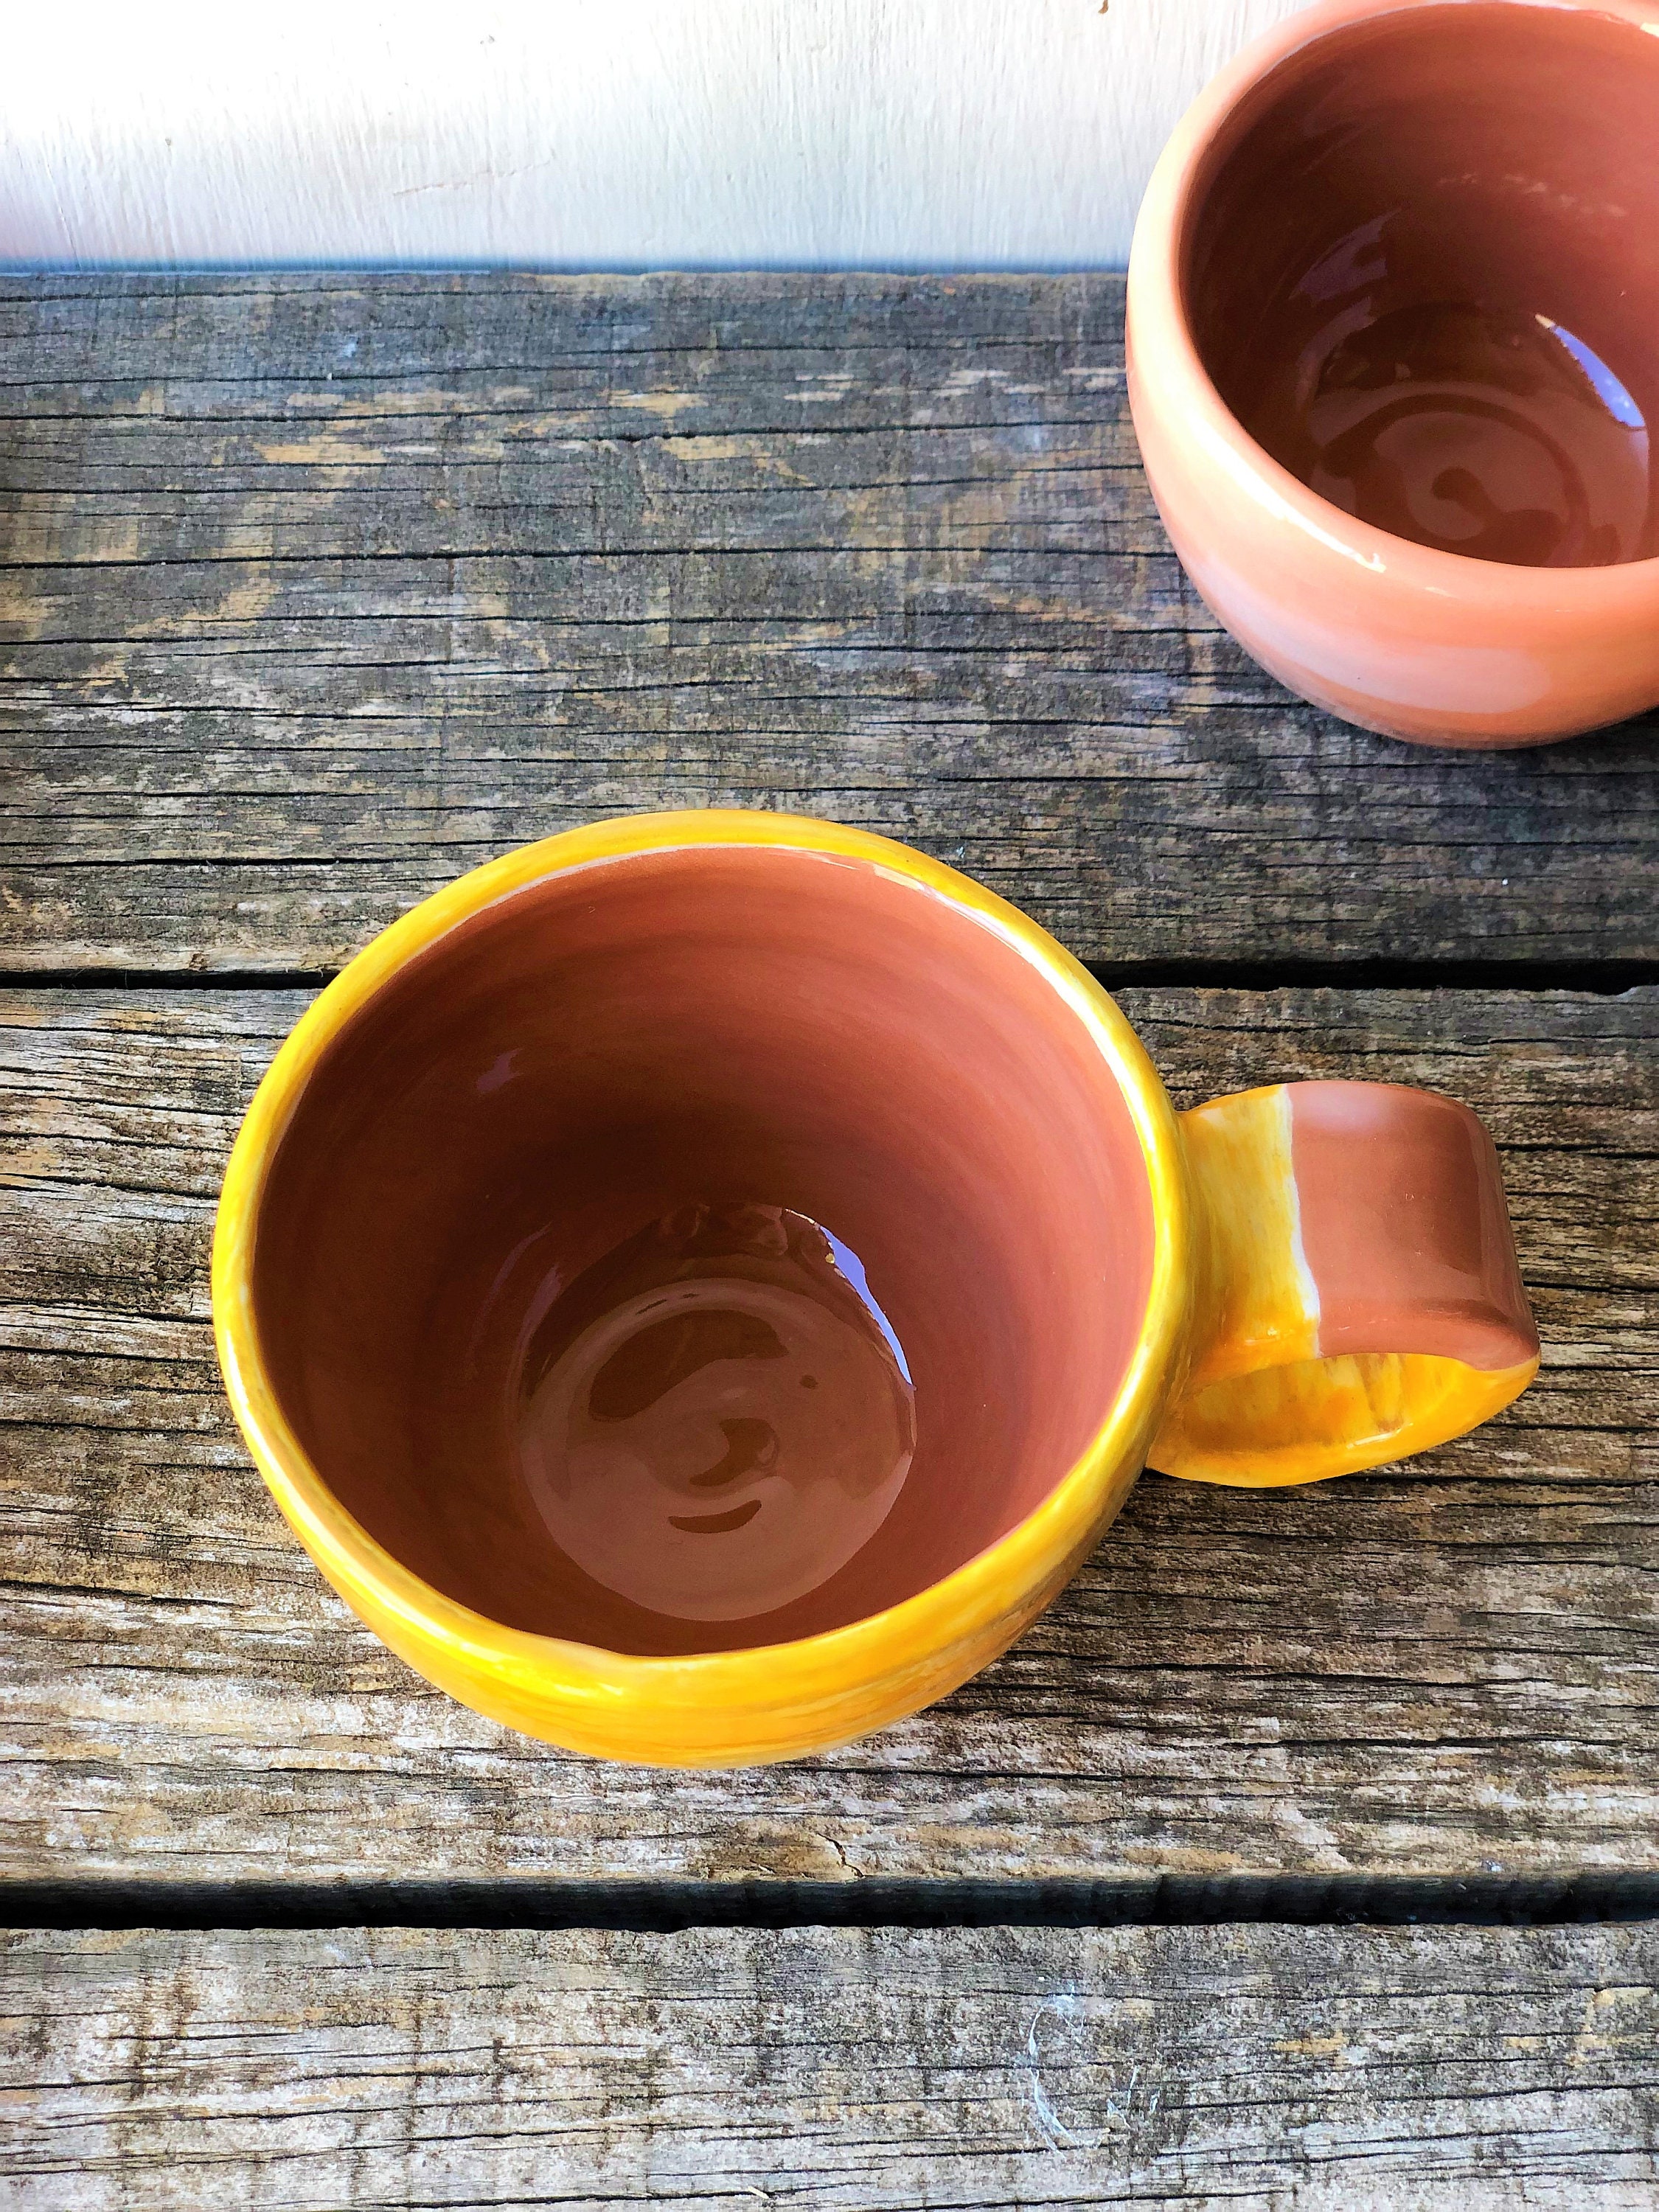 BlogBlog Ceramic Espresso Cups with Wooden Handle Espresso Shot Cups  Ceramic Tea Cups Porcelain Demi…See more BlogBlog Ceramic Espresso Cups  with